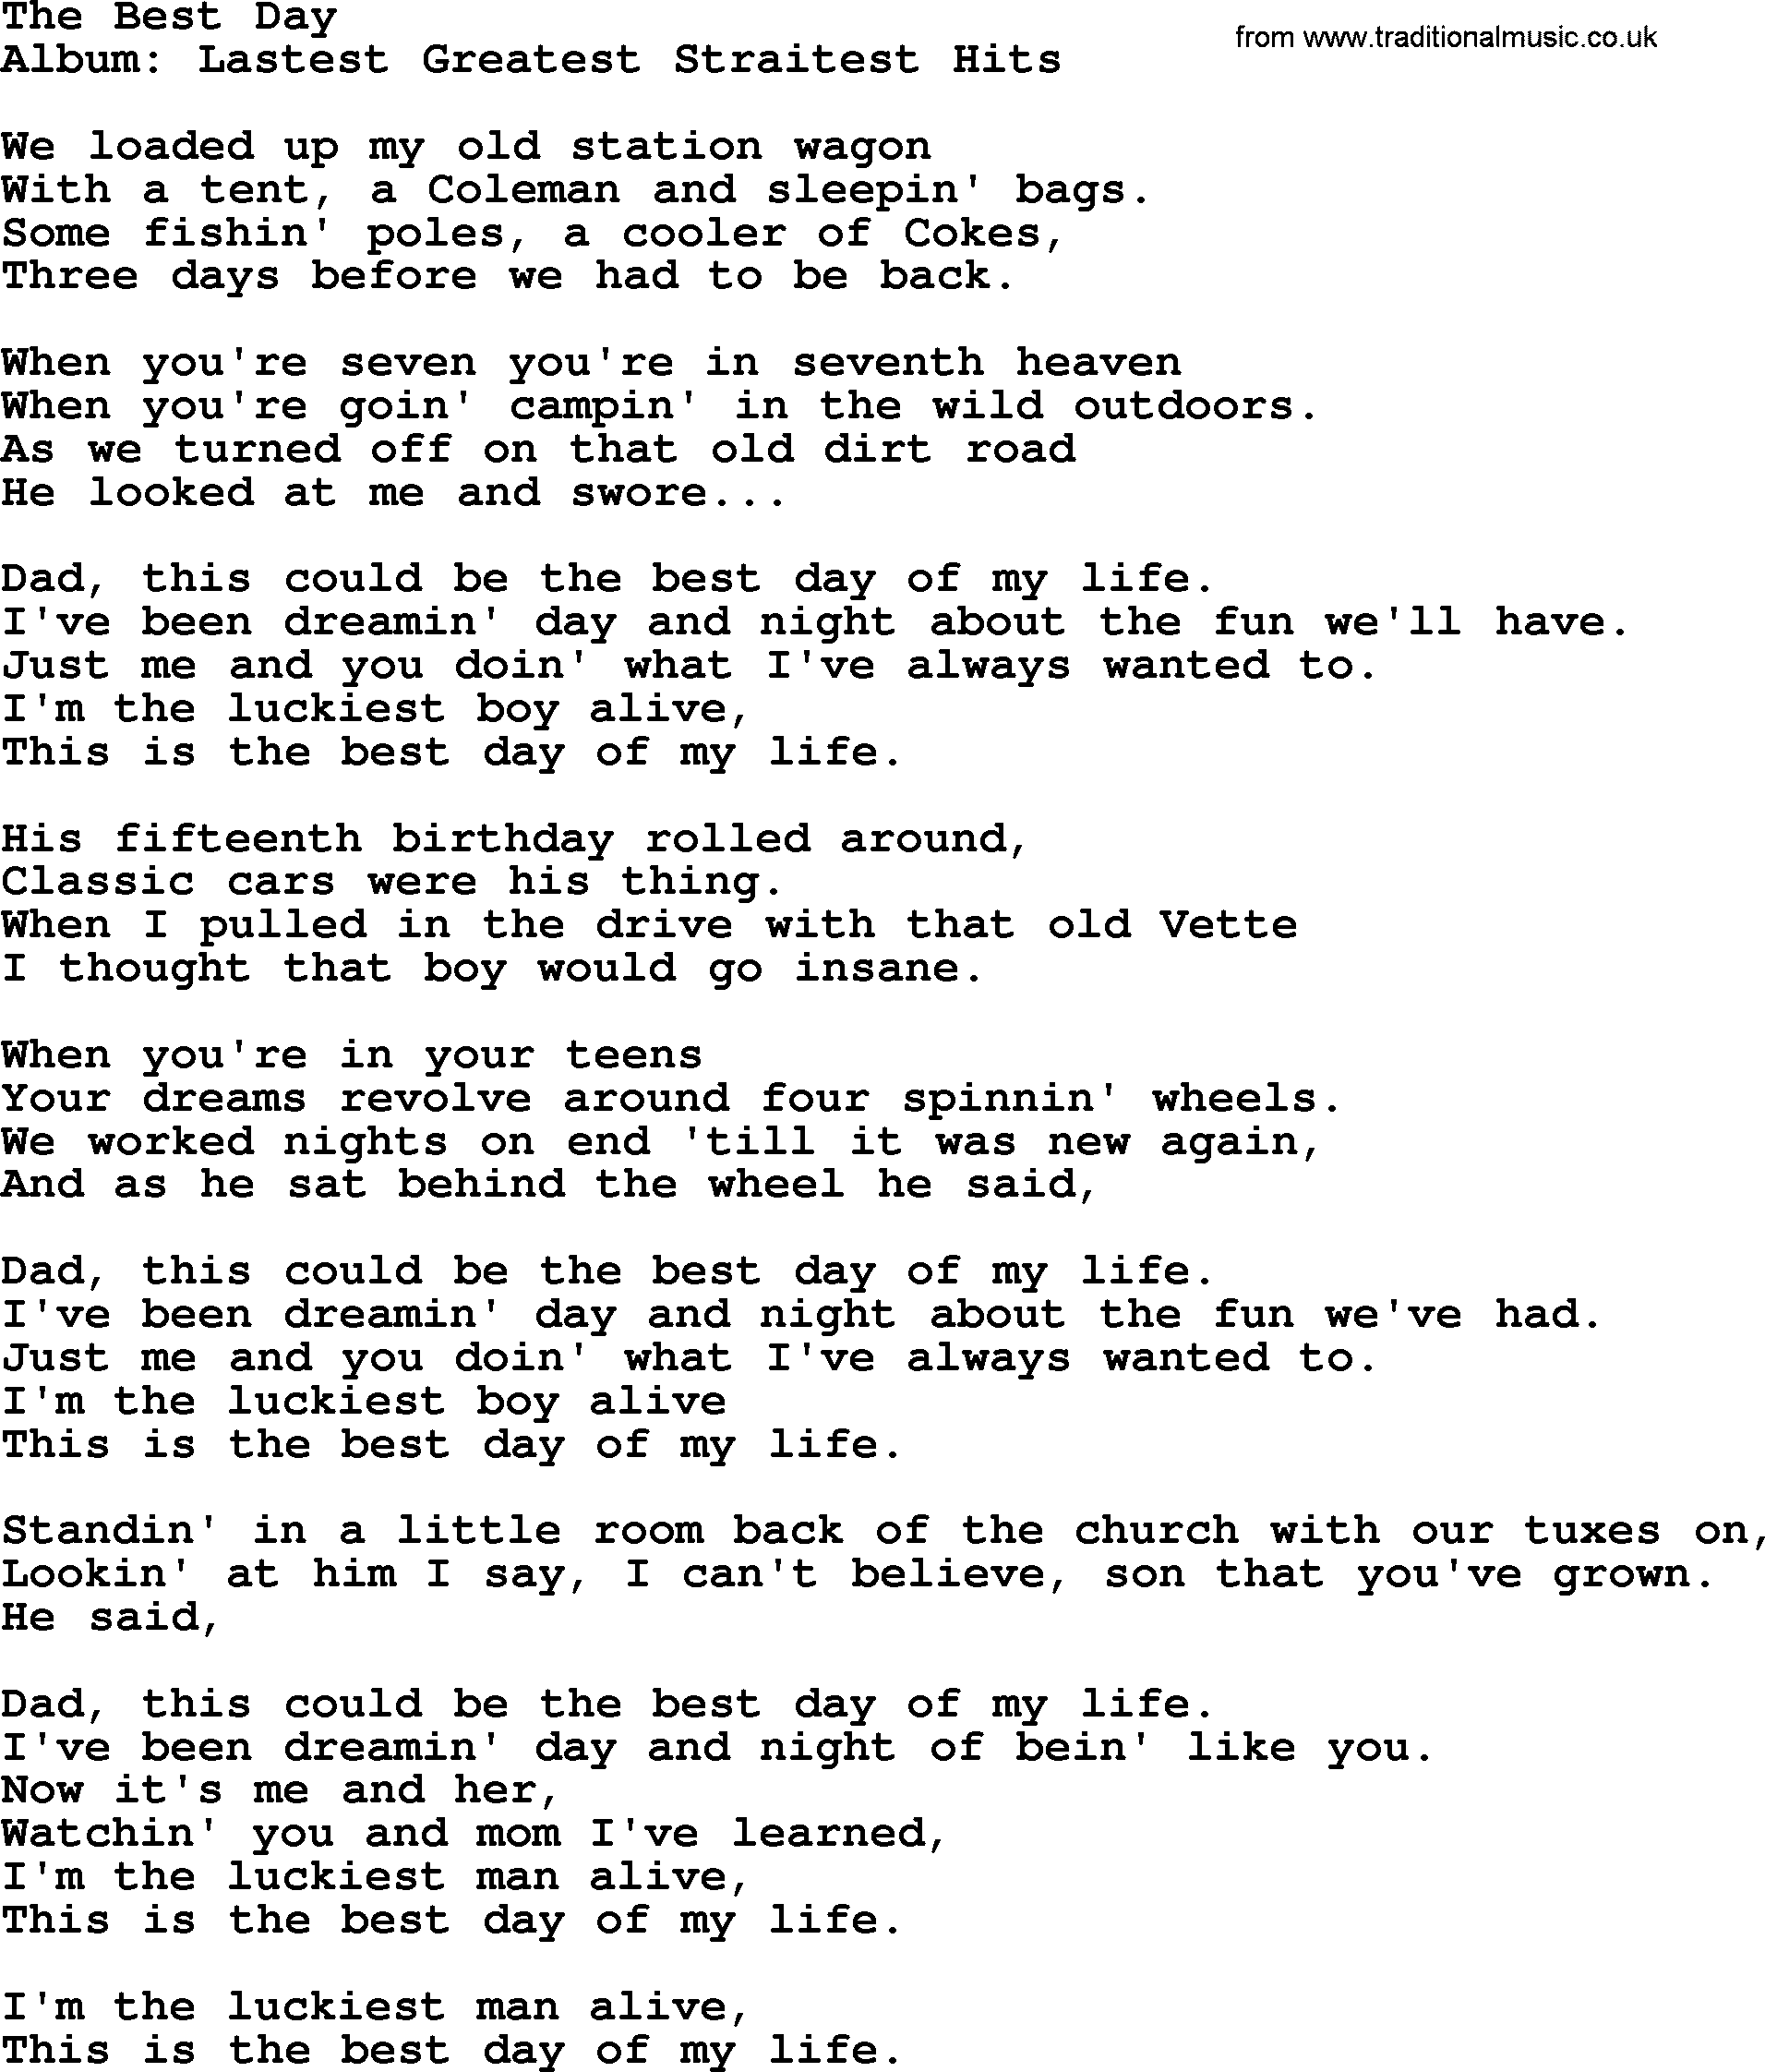 George Strait song: The Best Day, lyrics